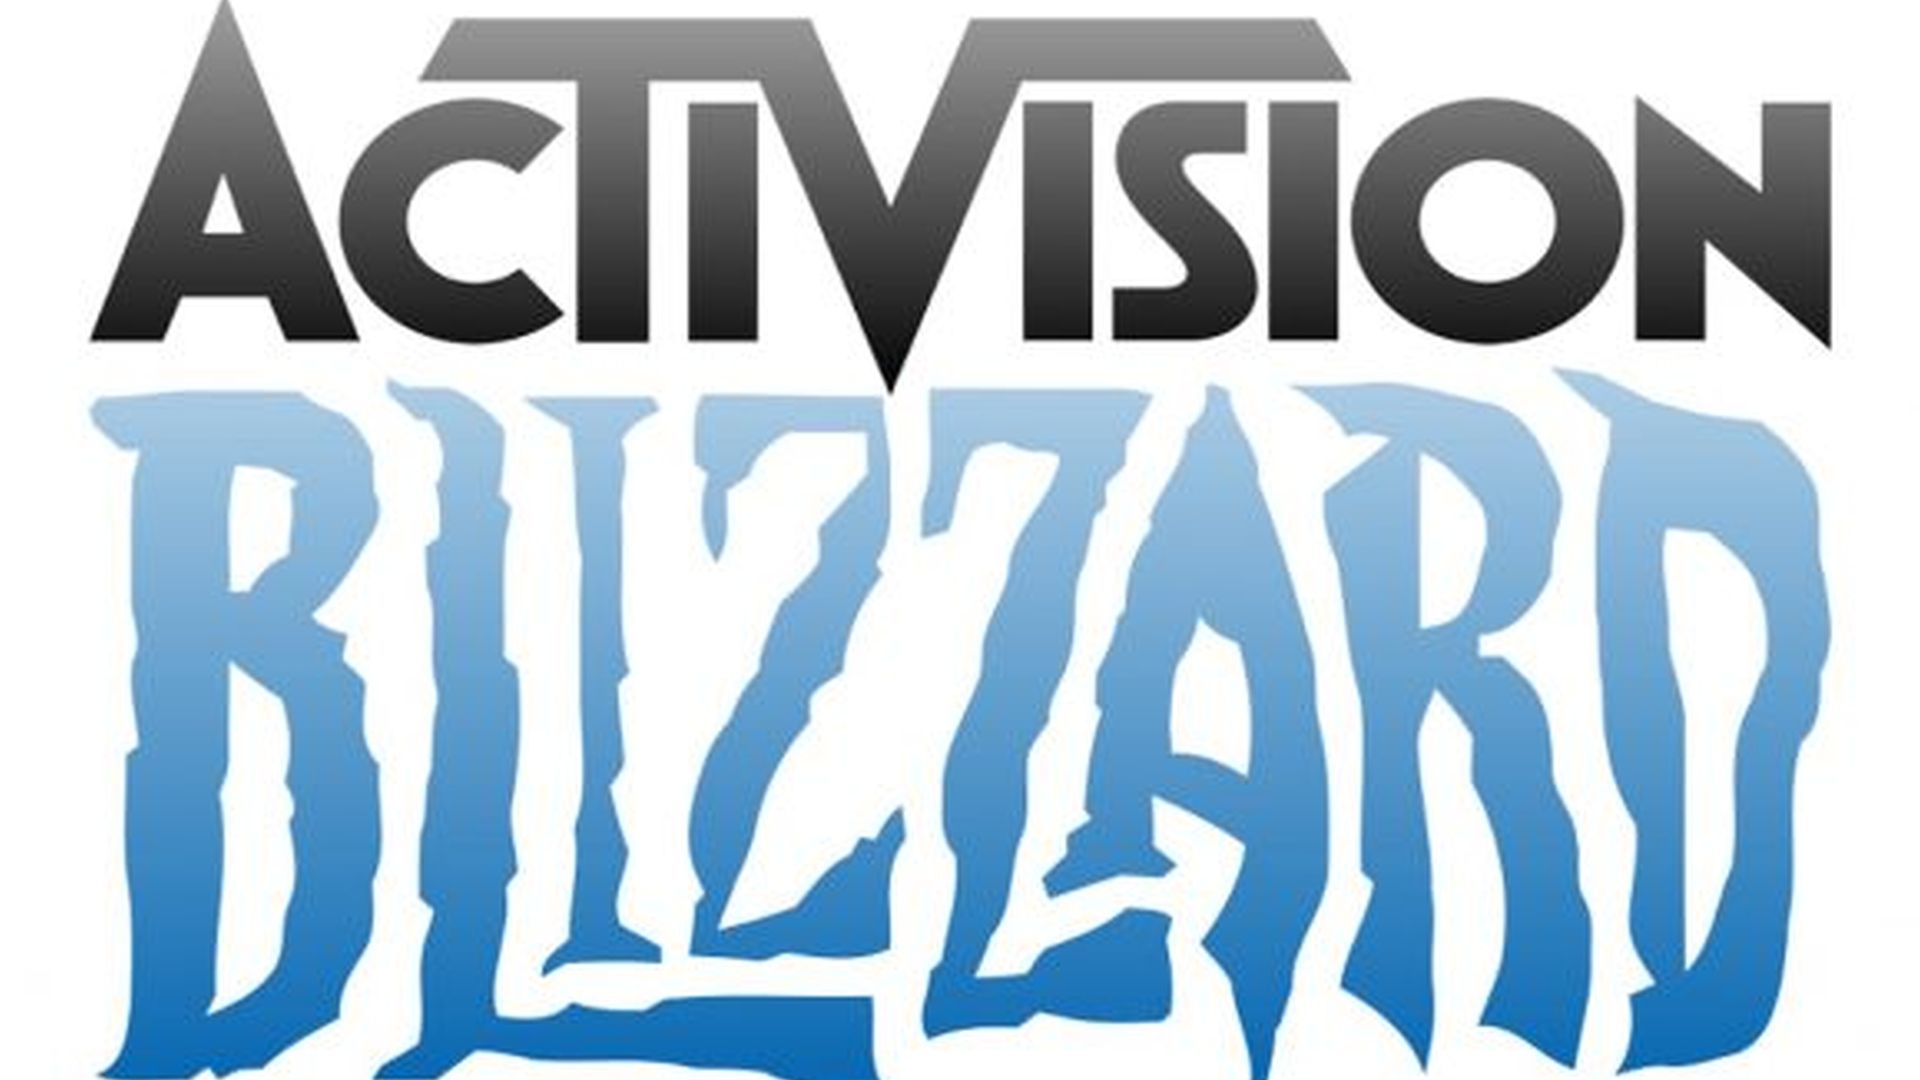 Ilogo ye-Activision Blizzard